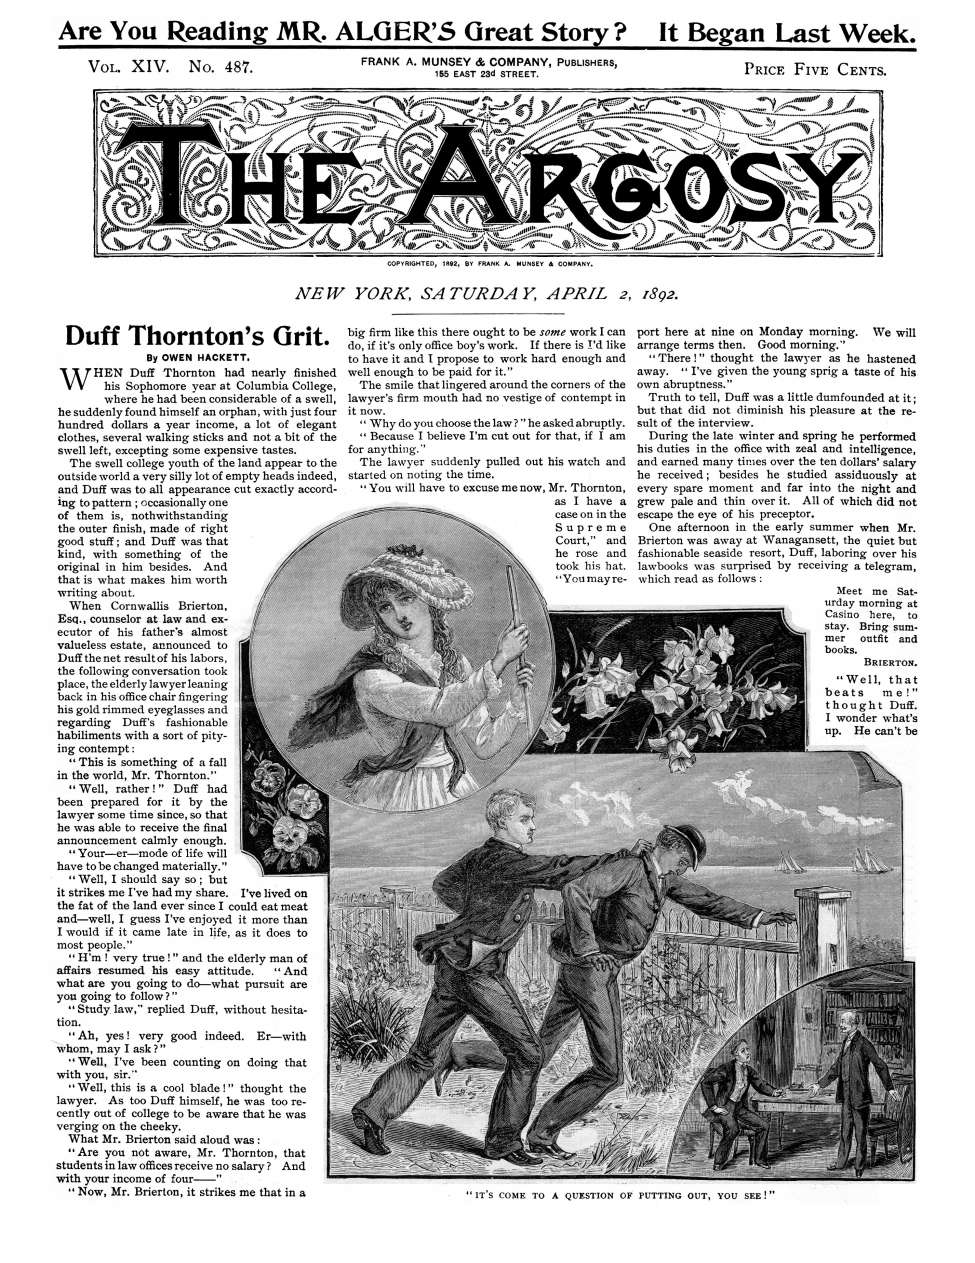 Comic Book Cover For The Argosy v14 487